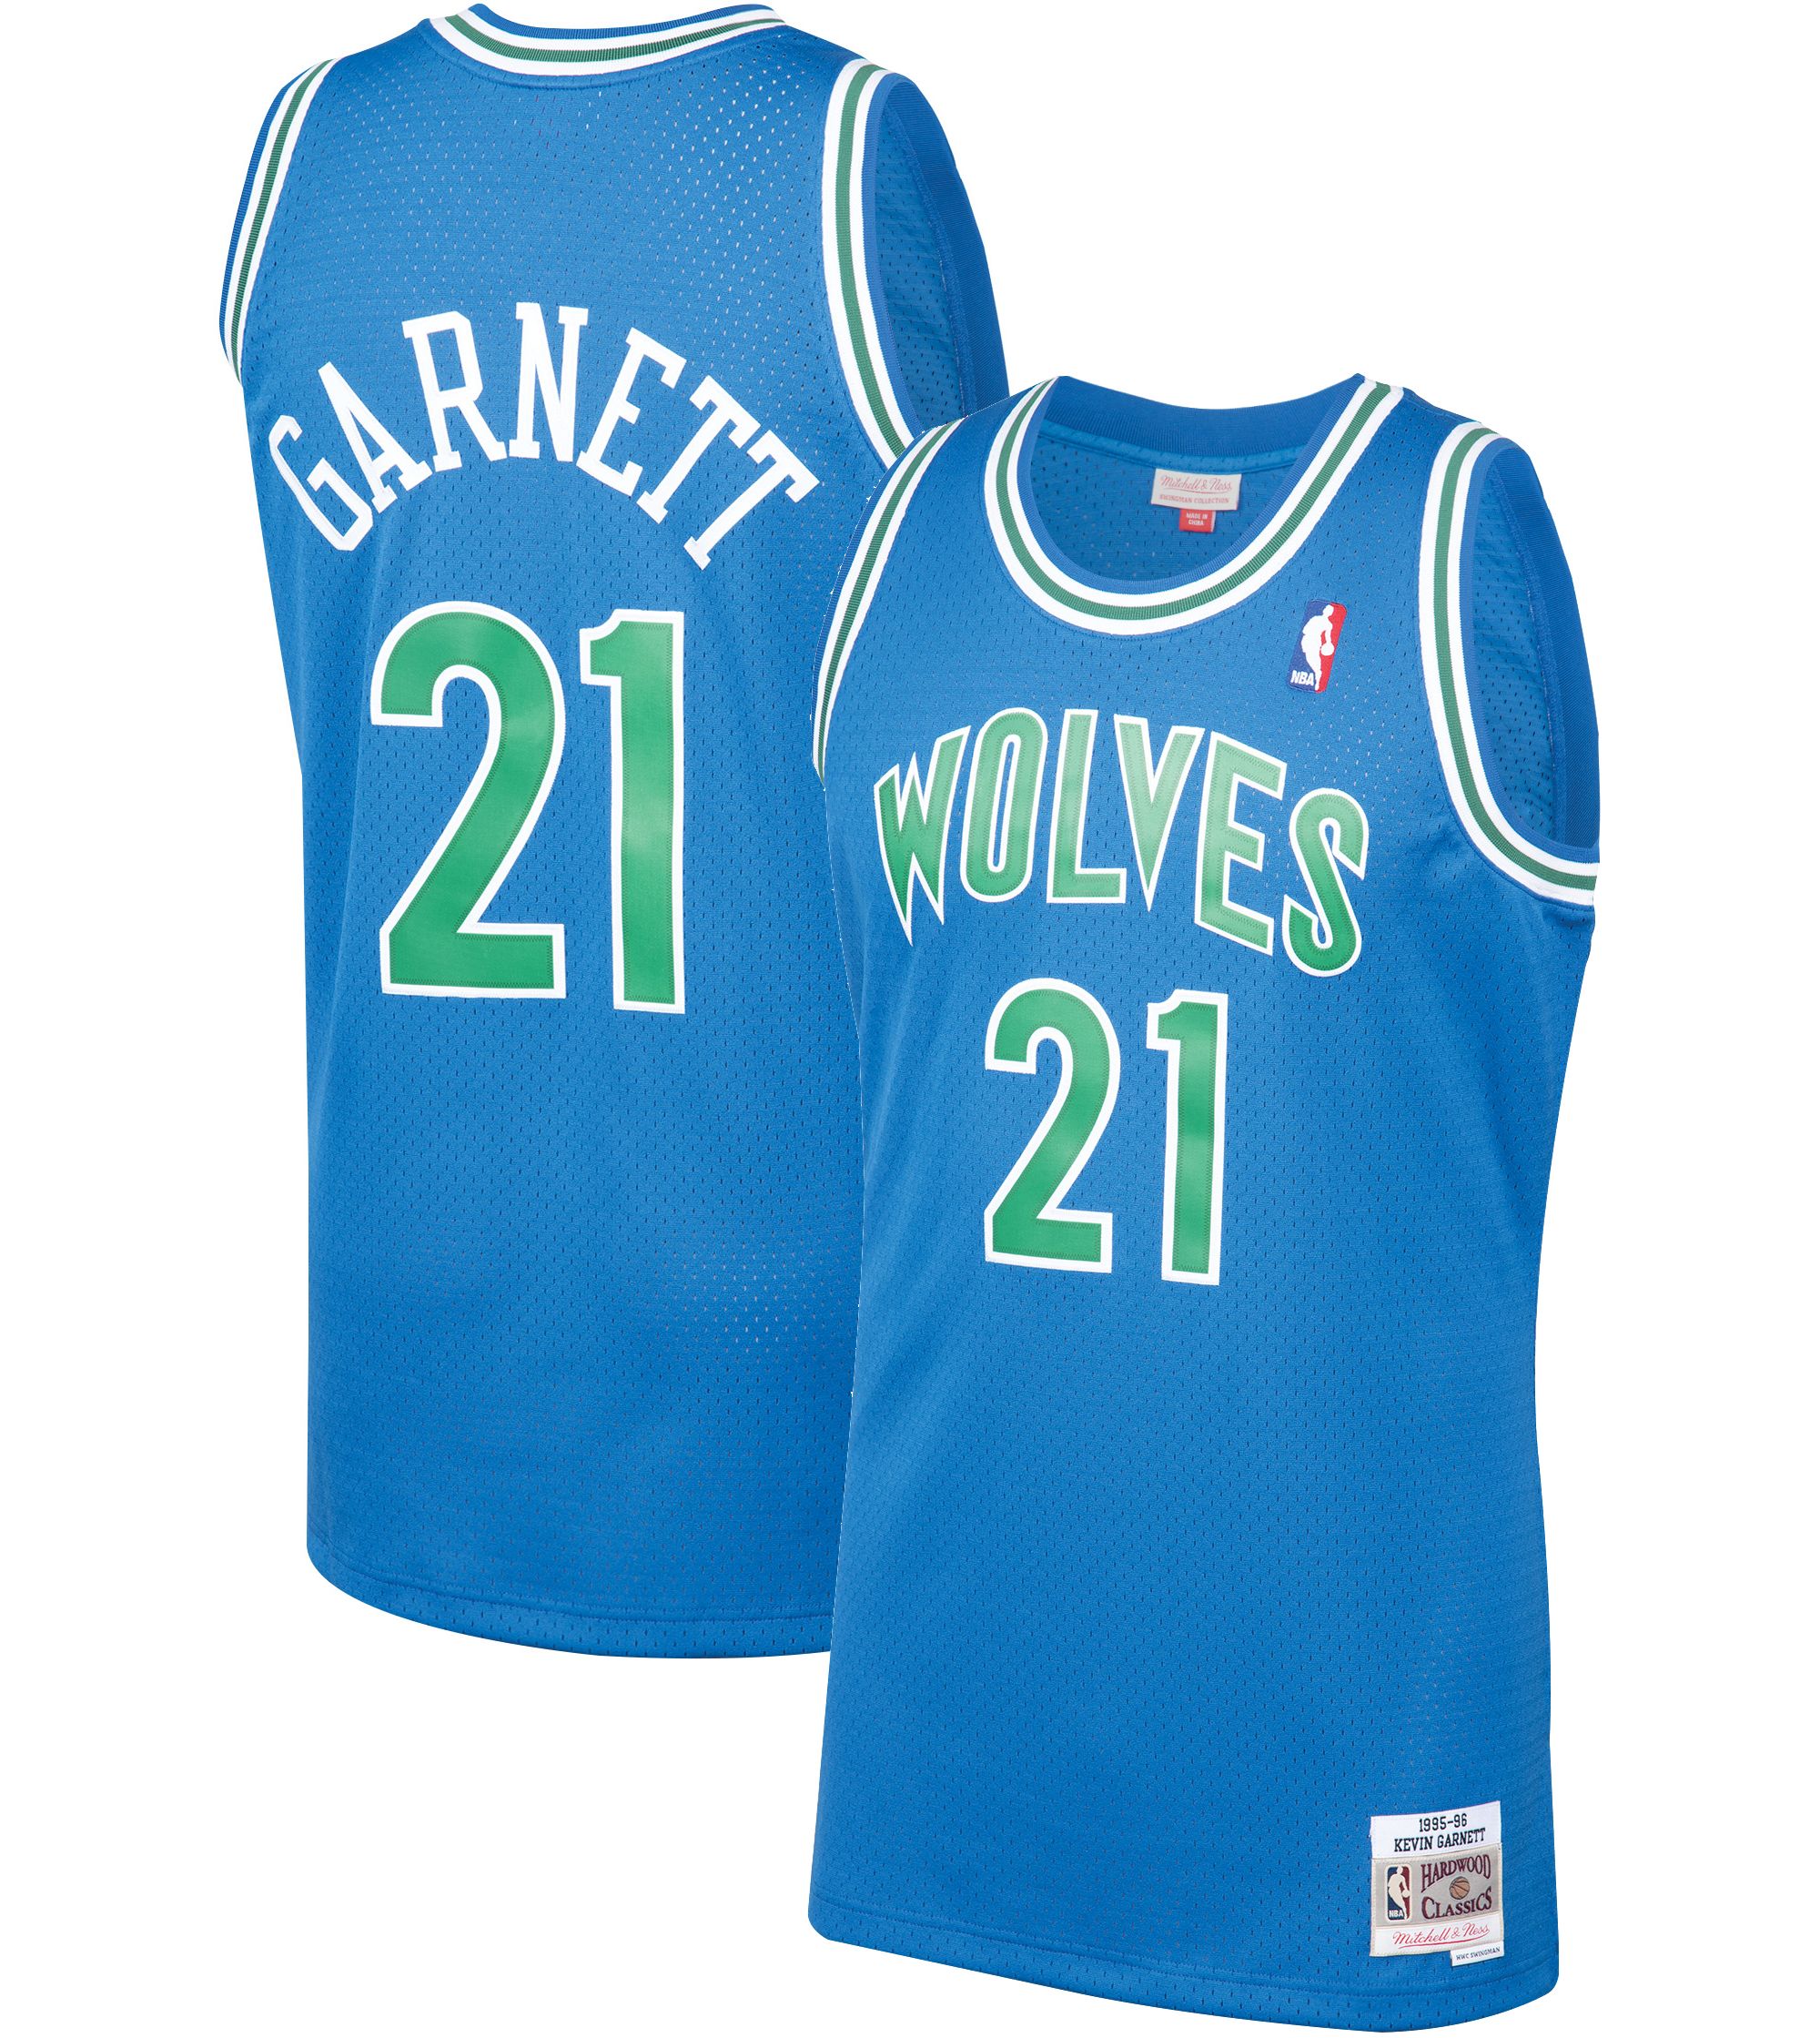 Kevin Garnett Is Back In No. 21 Timberwolves Jersey (PHOTOS)